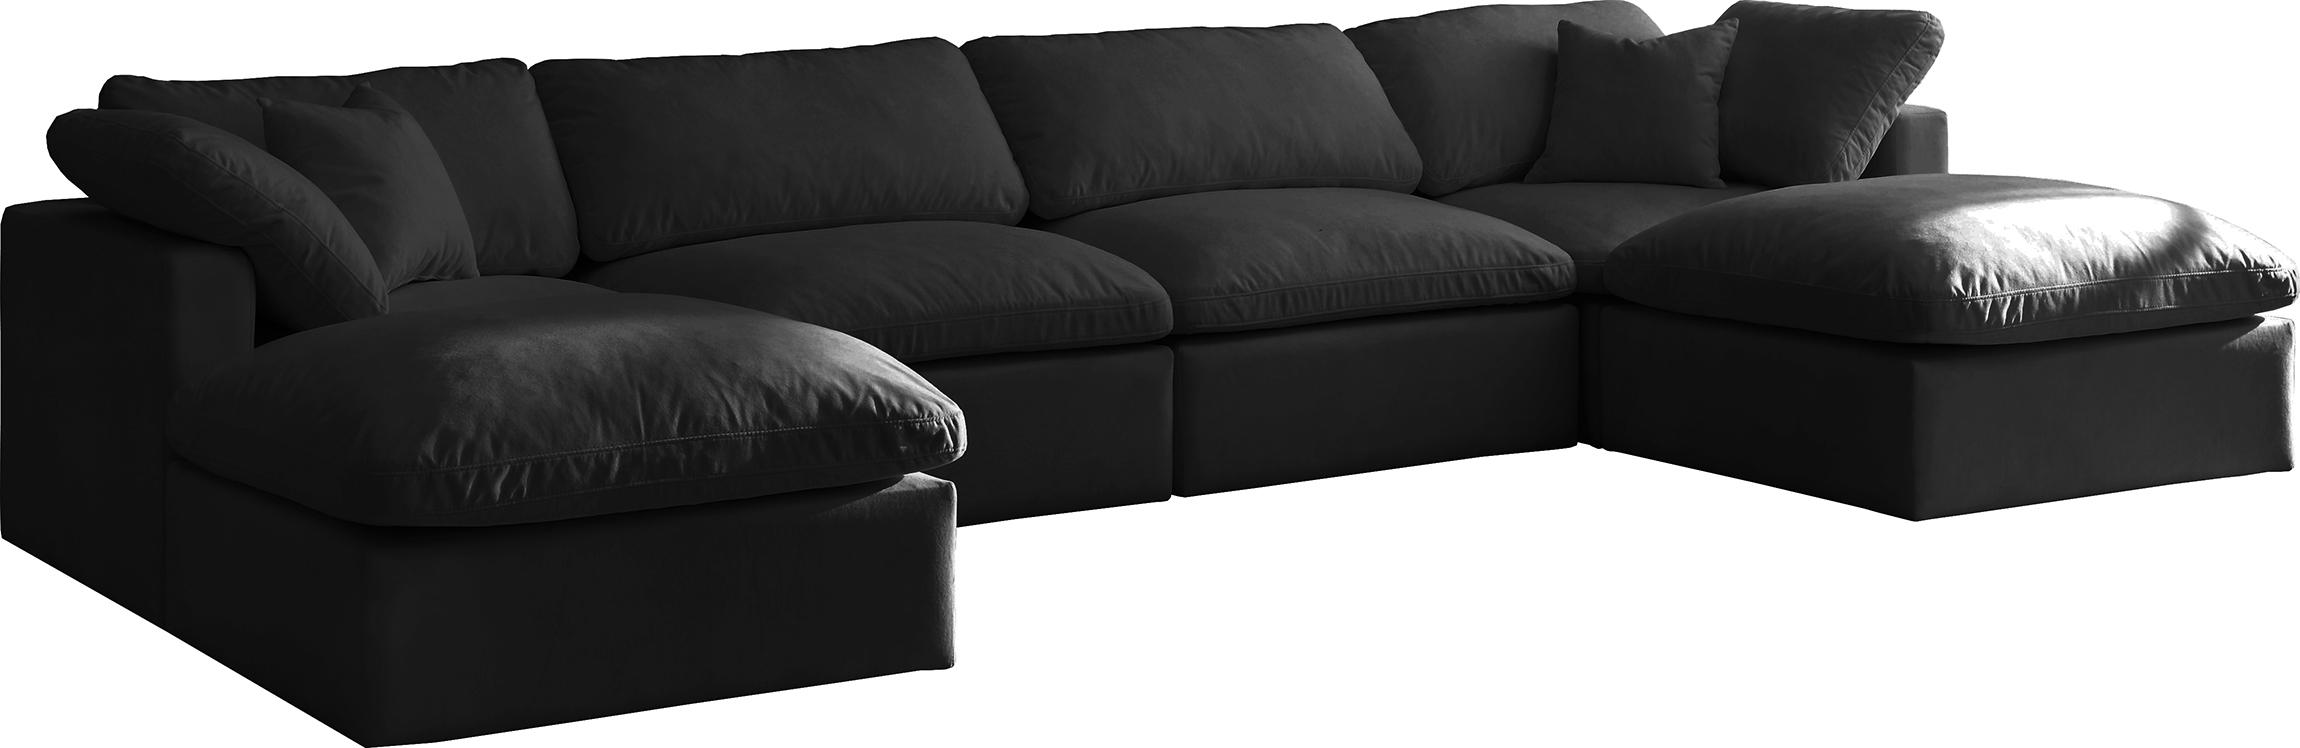 Contemporary, Modern Modular Sectional Sofa 602Black-Sec6B 602Black-Sec6B in Black Fabric